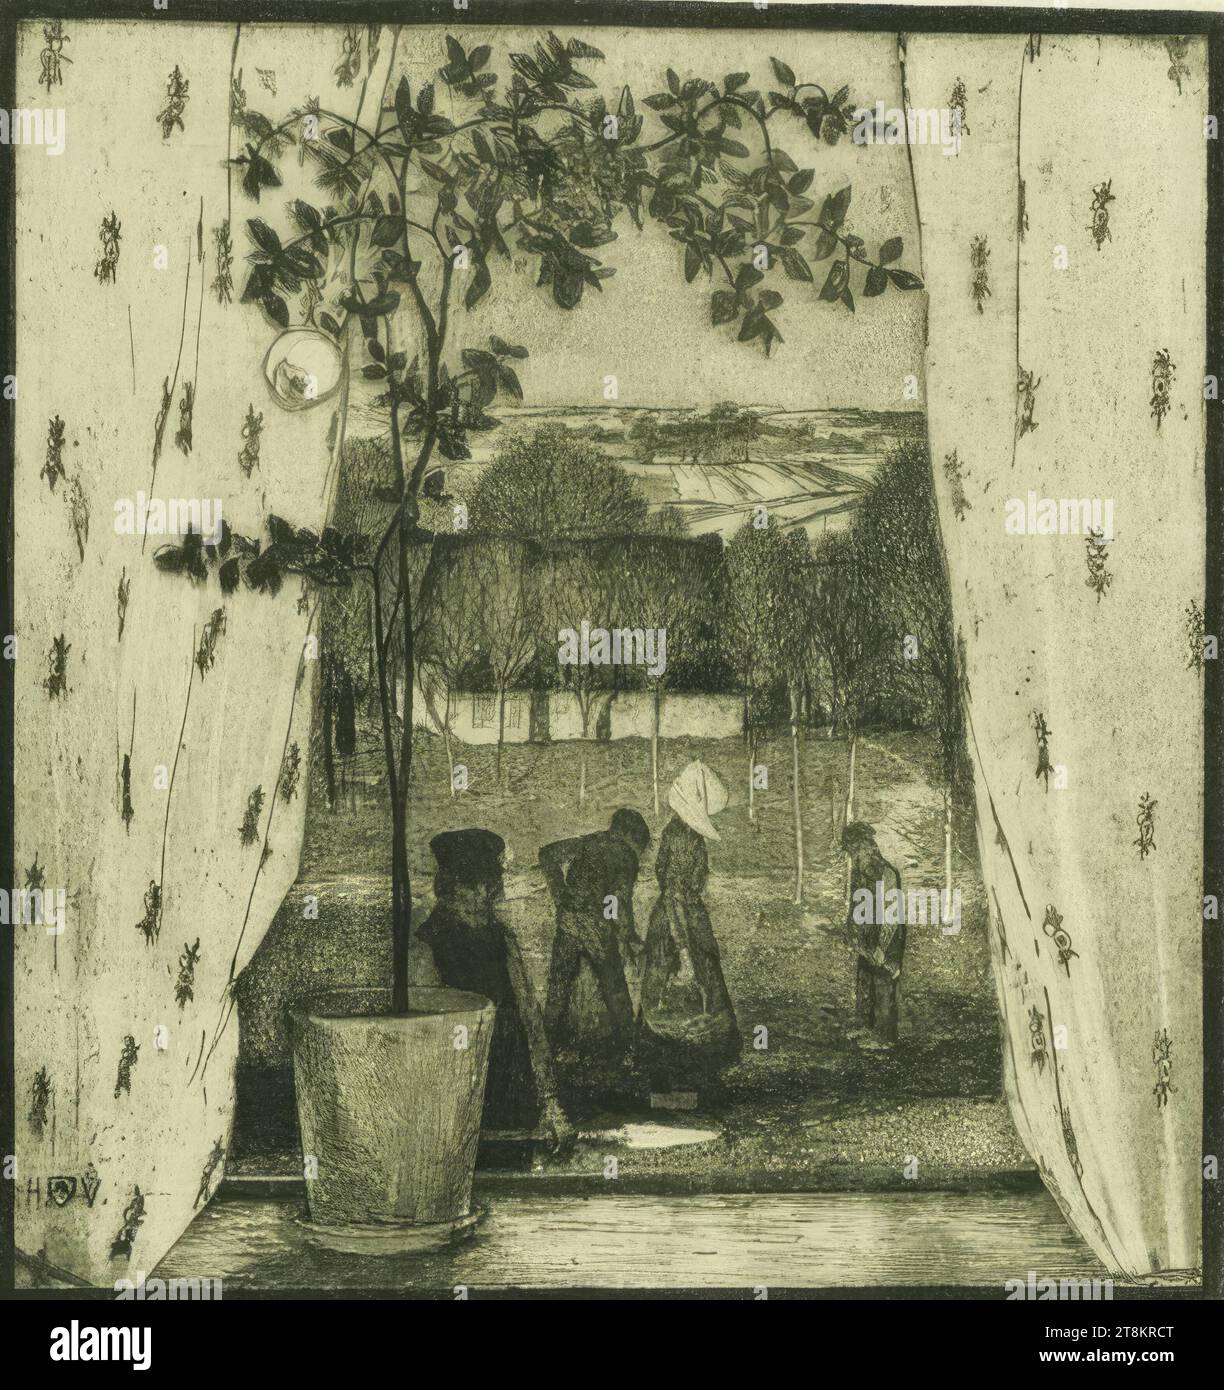 To spring; Before closing time, To spring, Heinrich Johann Vogeler, Bremen 1872 - 1942 Vorosilovsk, Kazakhstan, 1899, print, etching Stock Photo